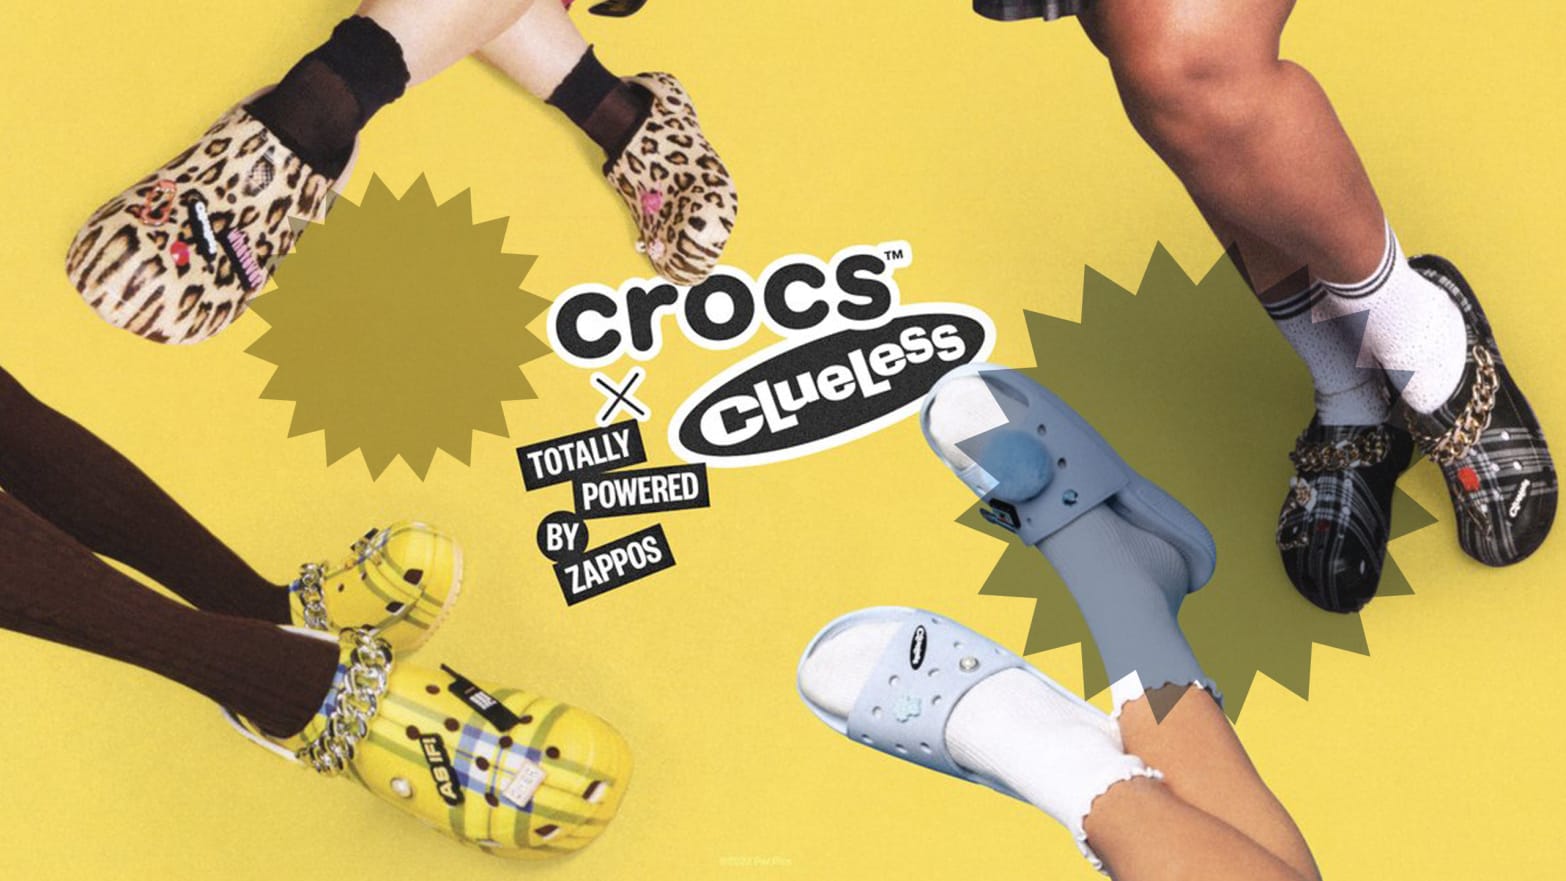 Crocs x Clueless Collection Zappos